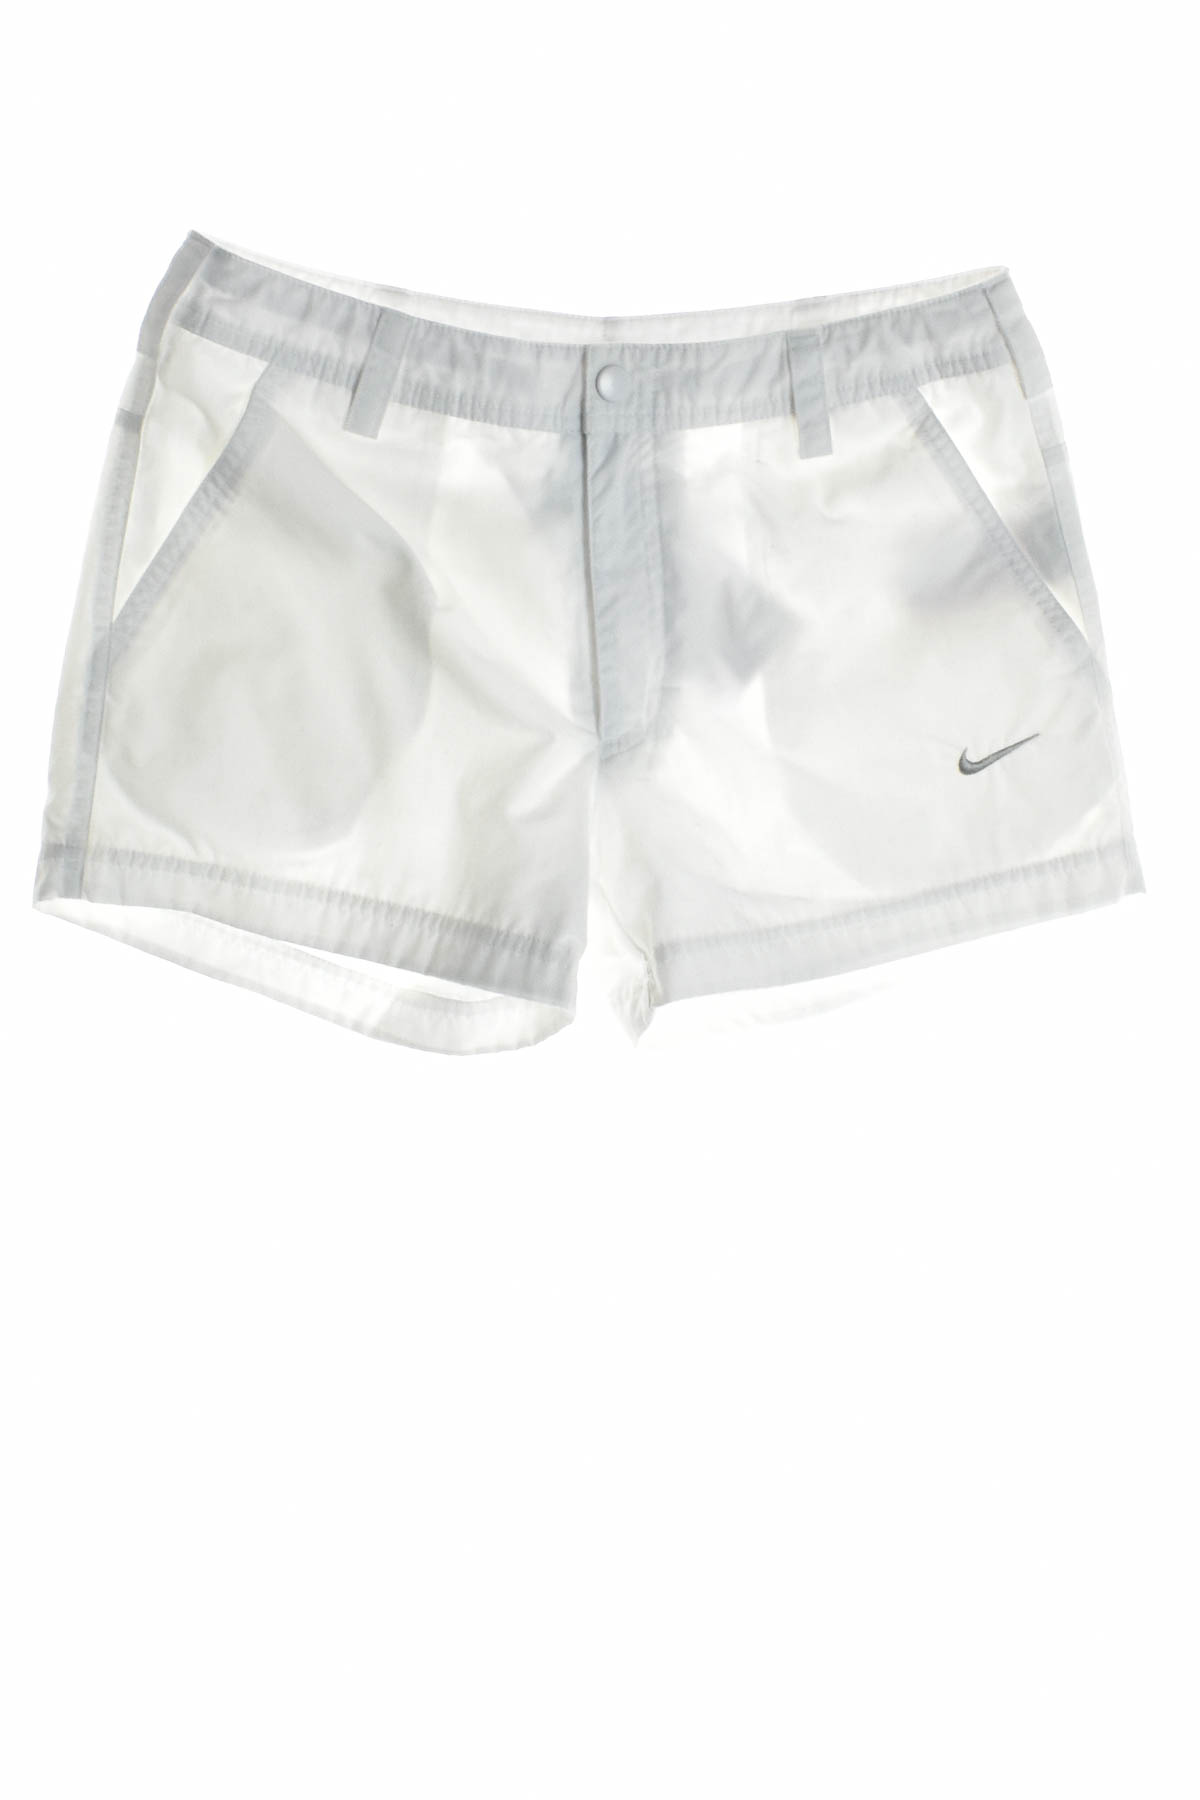 Shorts for girls - NIKE - 0